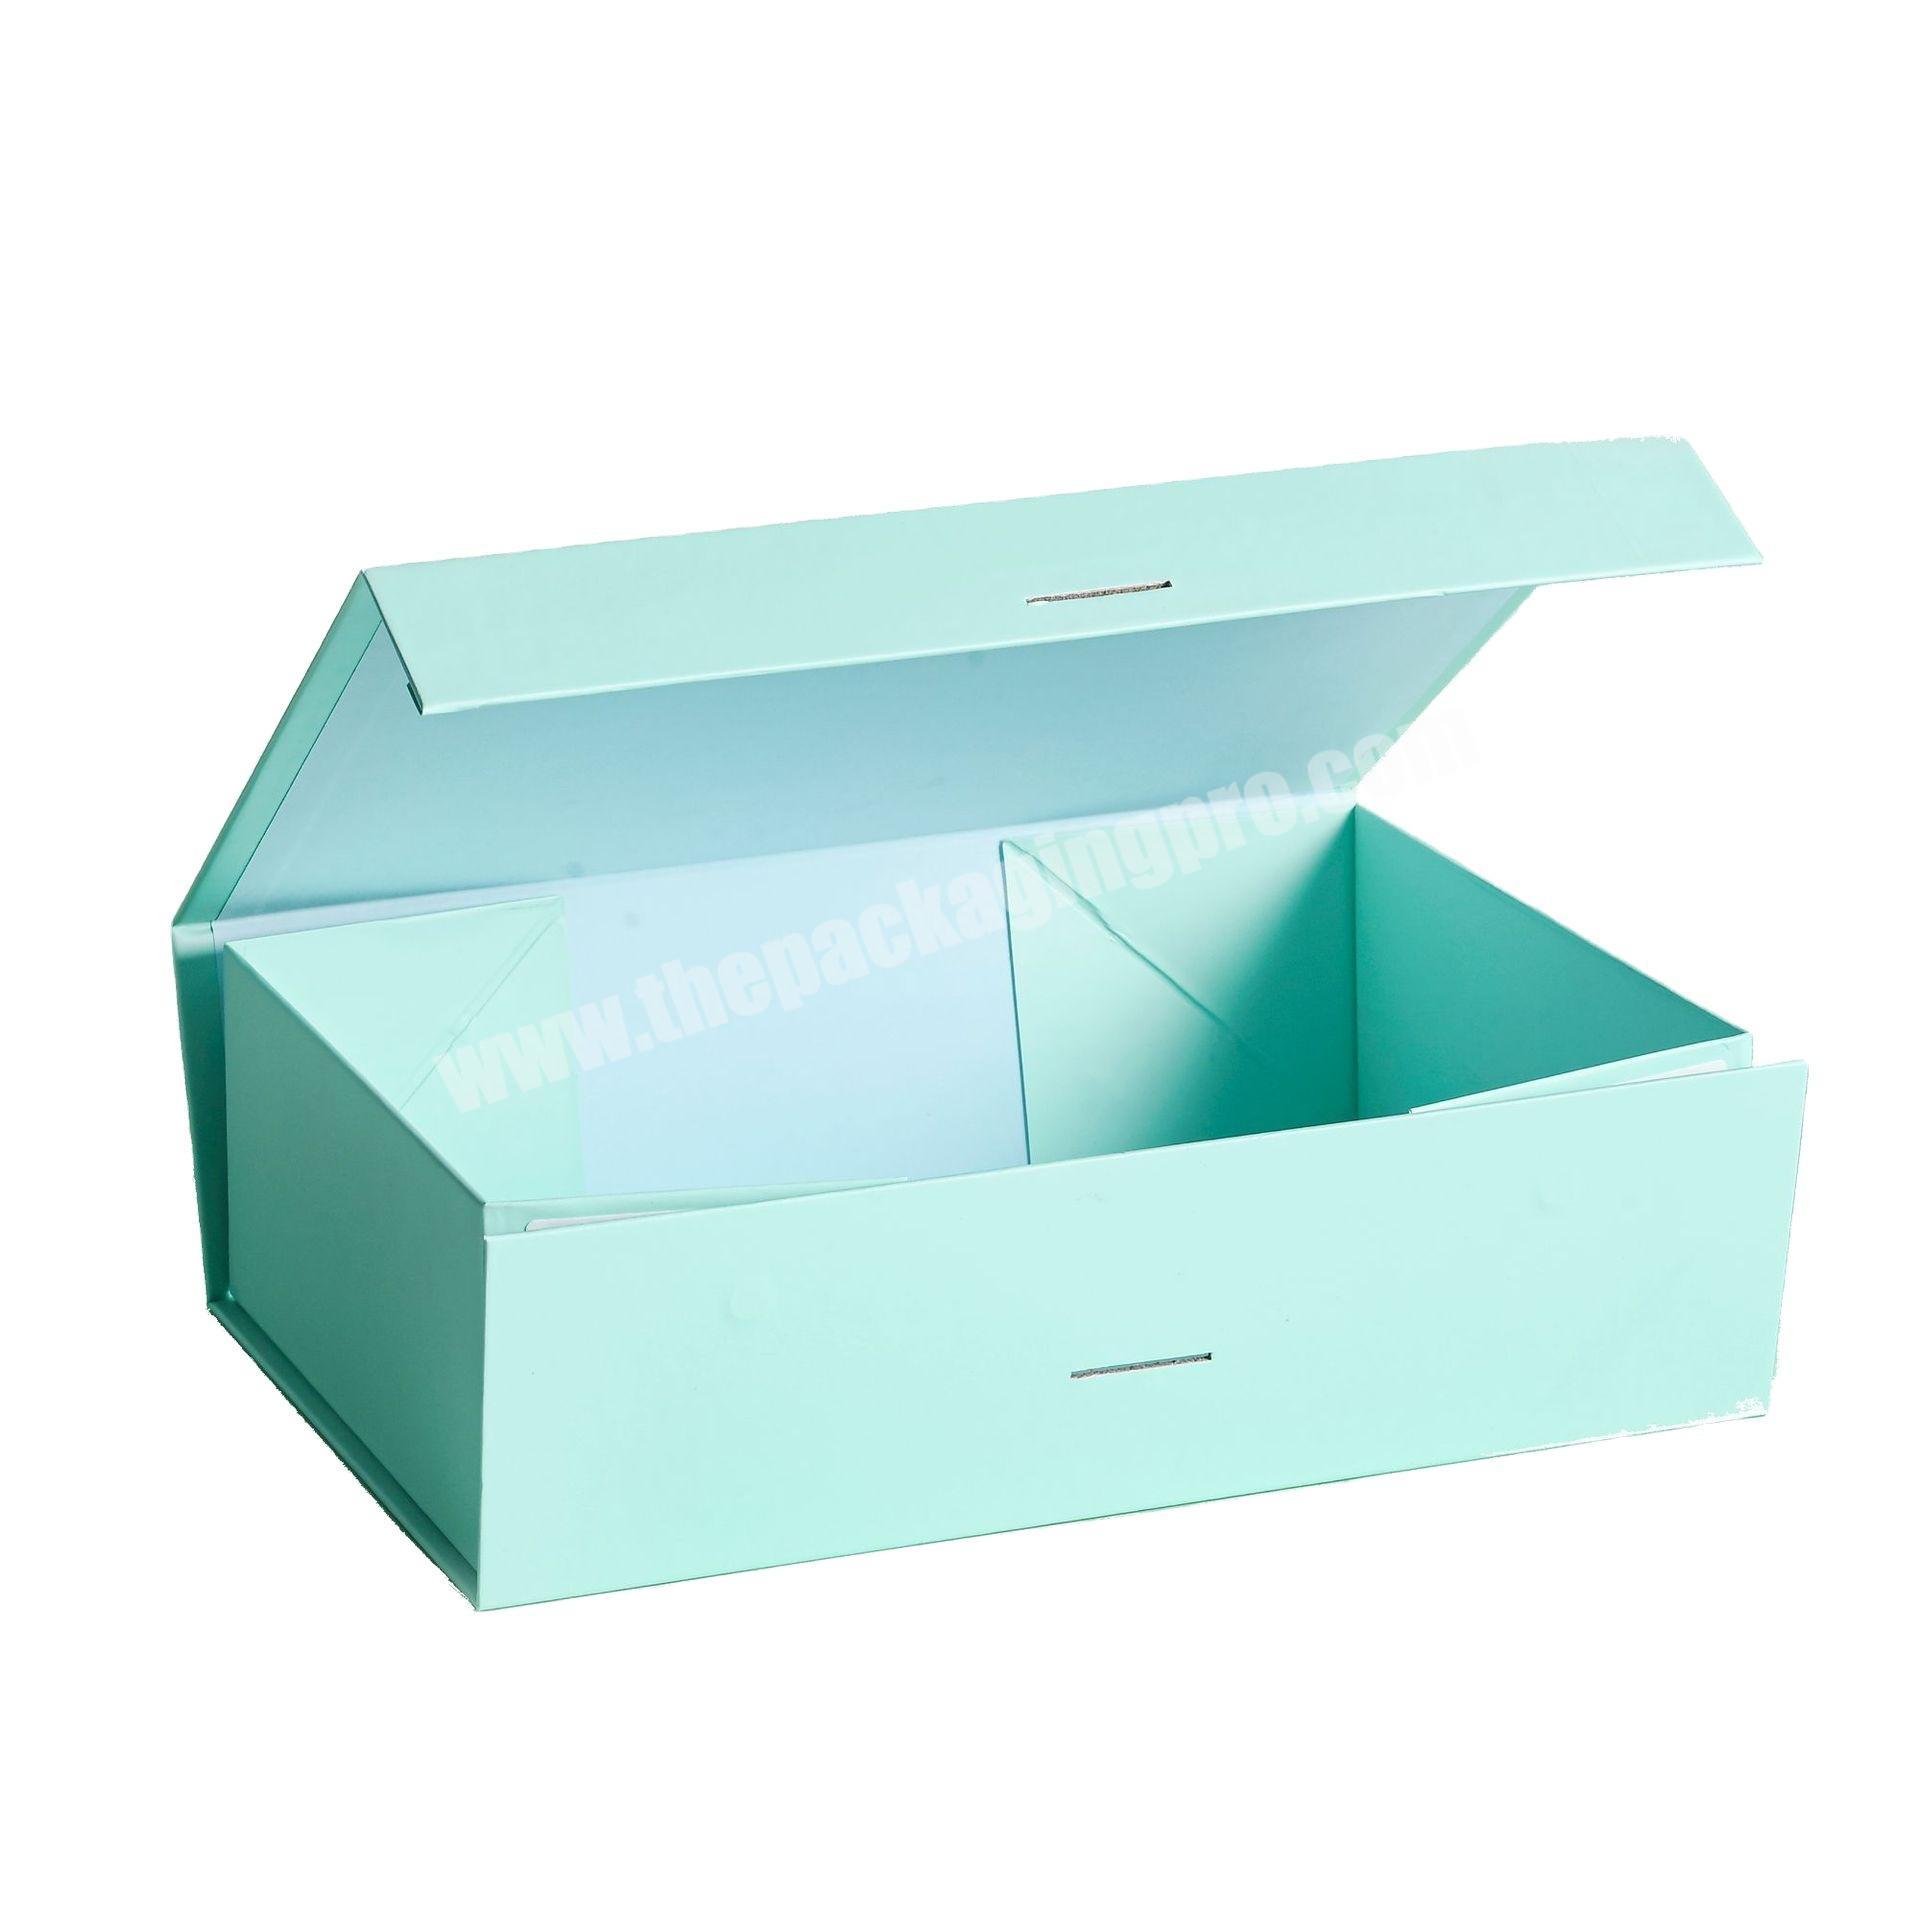 Custom logo black luxury cardboard magnetic folding packaging gift box closure with foam